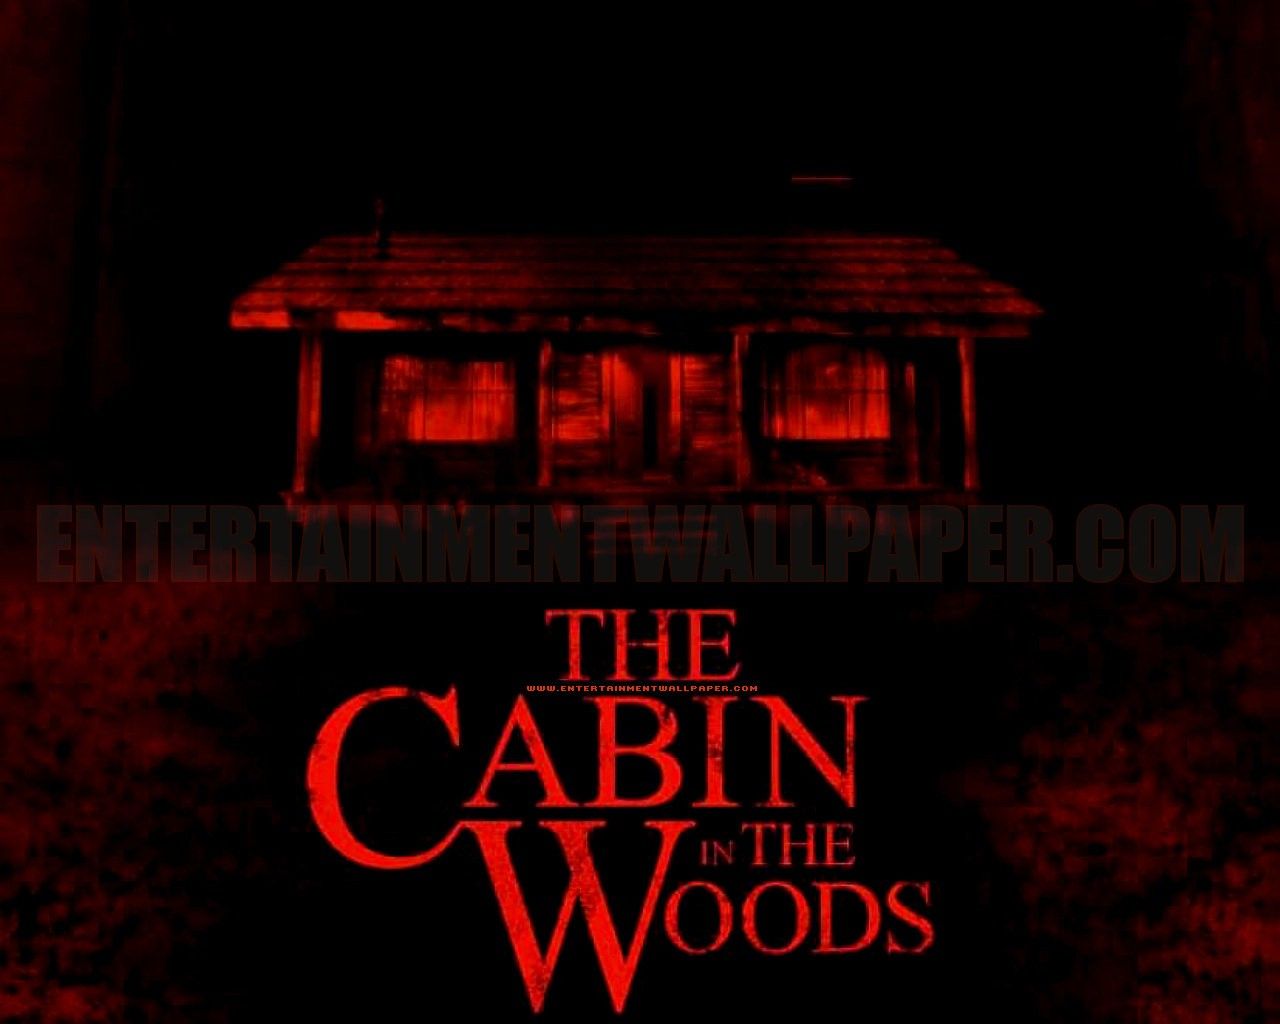 Free download The Cabin in the Woods Wallpaper 10030025 1280x1024 Desktop [1280x1024] for your Desktop, Mobile & Tablet. Explore Cabin in the Woods Wallpaper. Free Winter Cabin Wallpaper Image